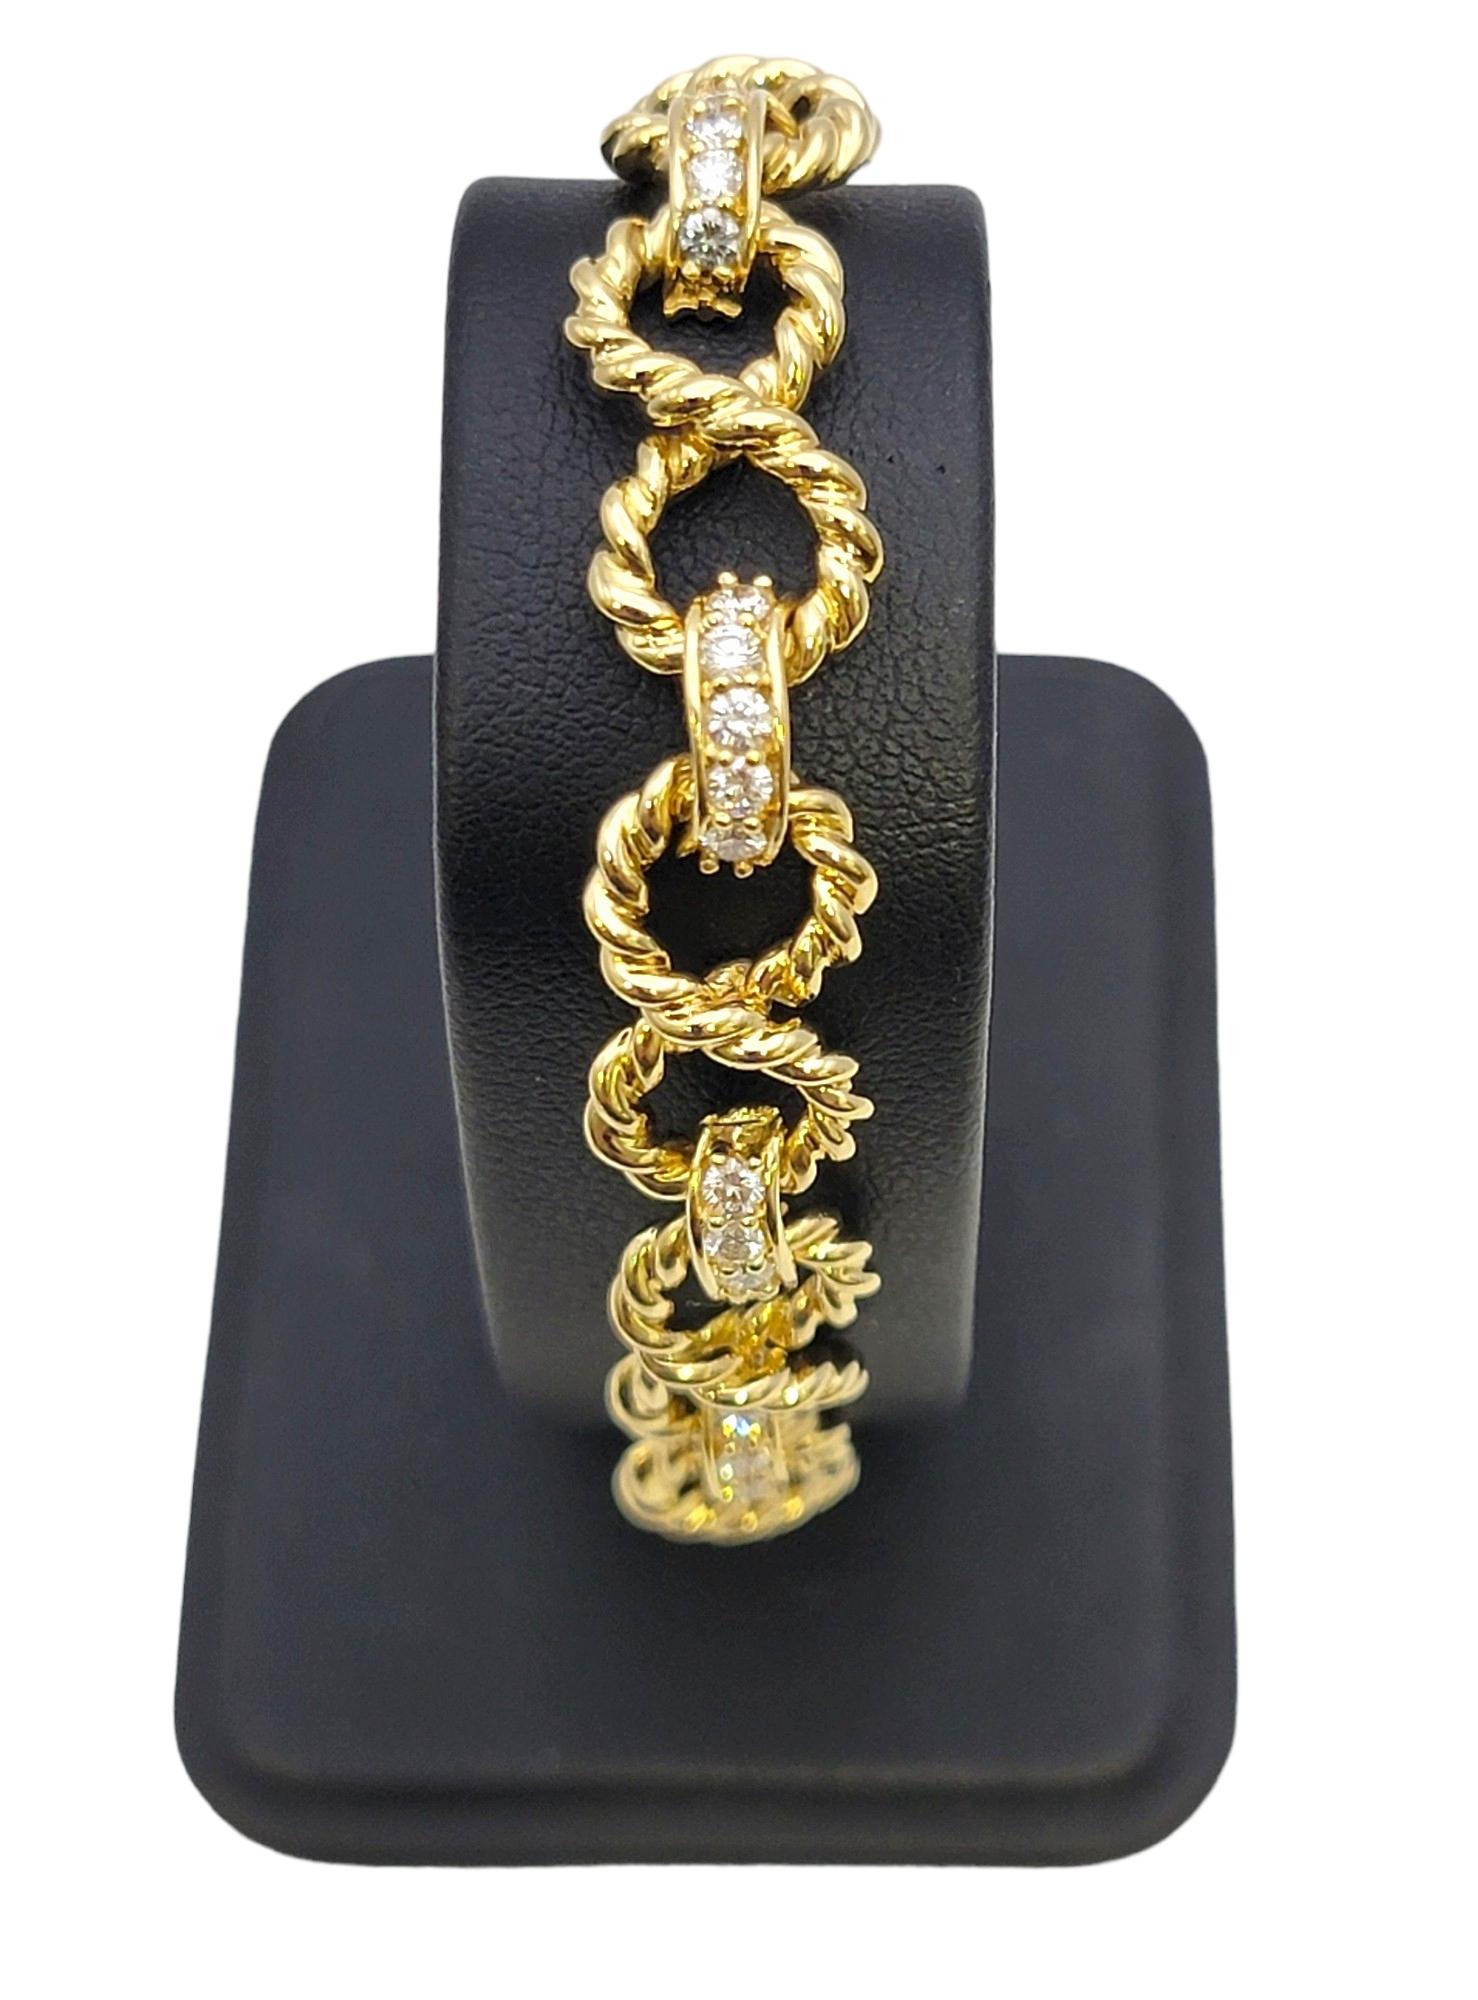 Vintage Tiffany & Co. Infinity Link Bracelet with Diamonds 18 Karat Yellow Gold 6